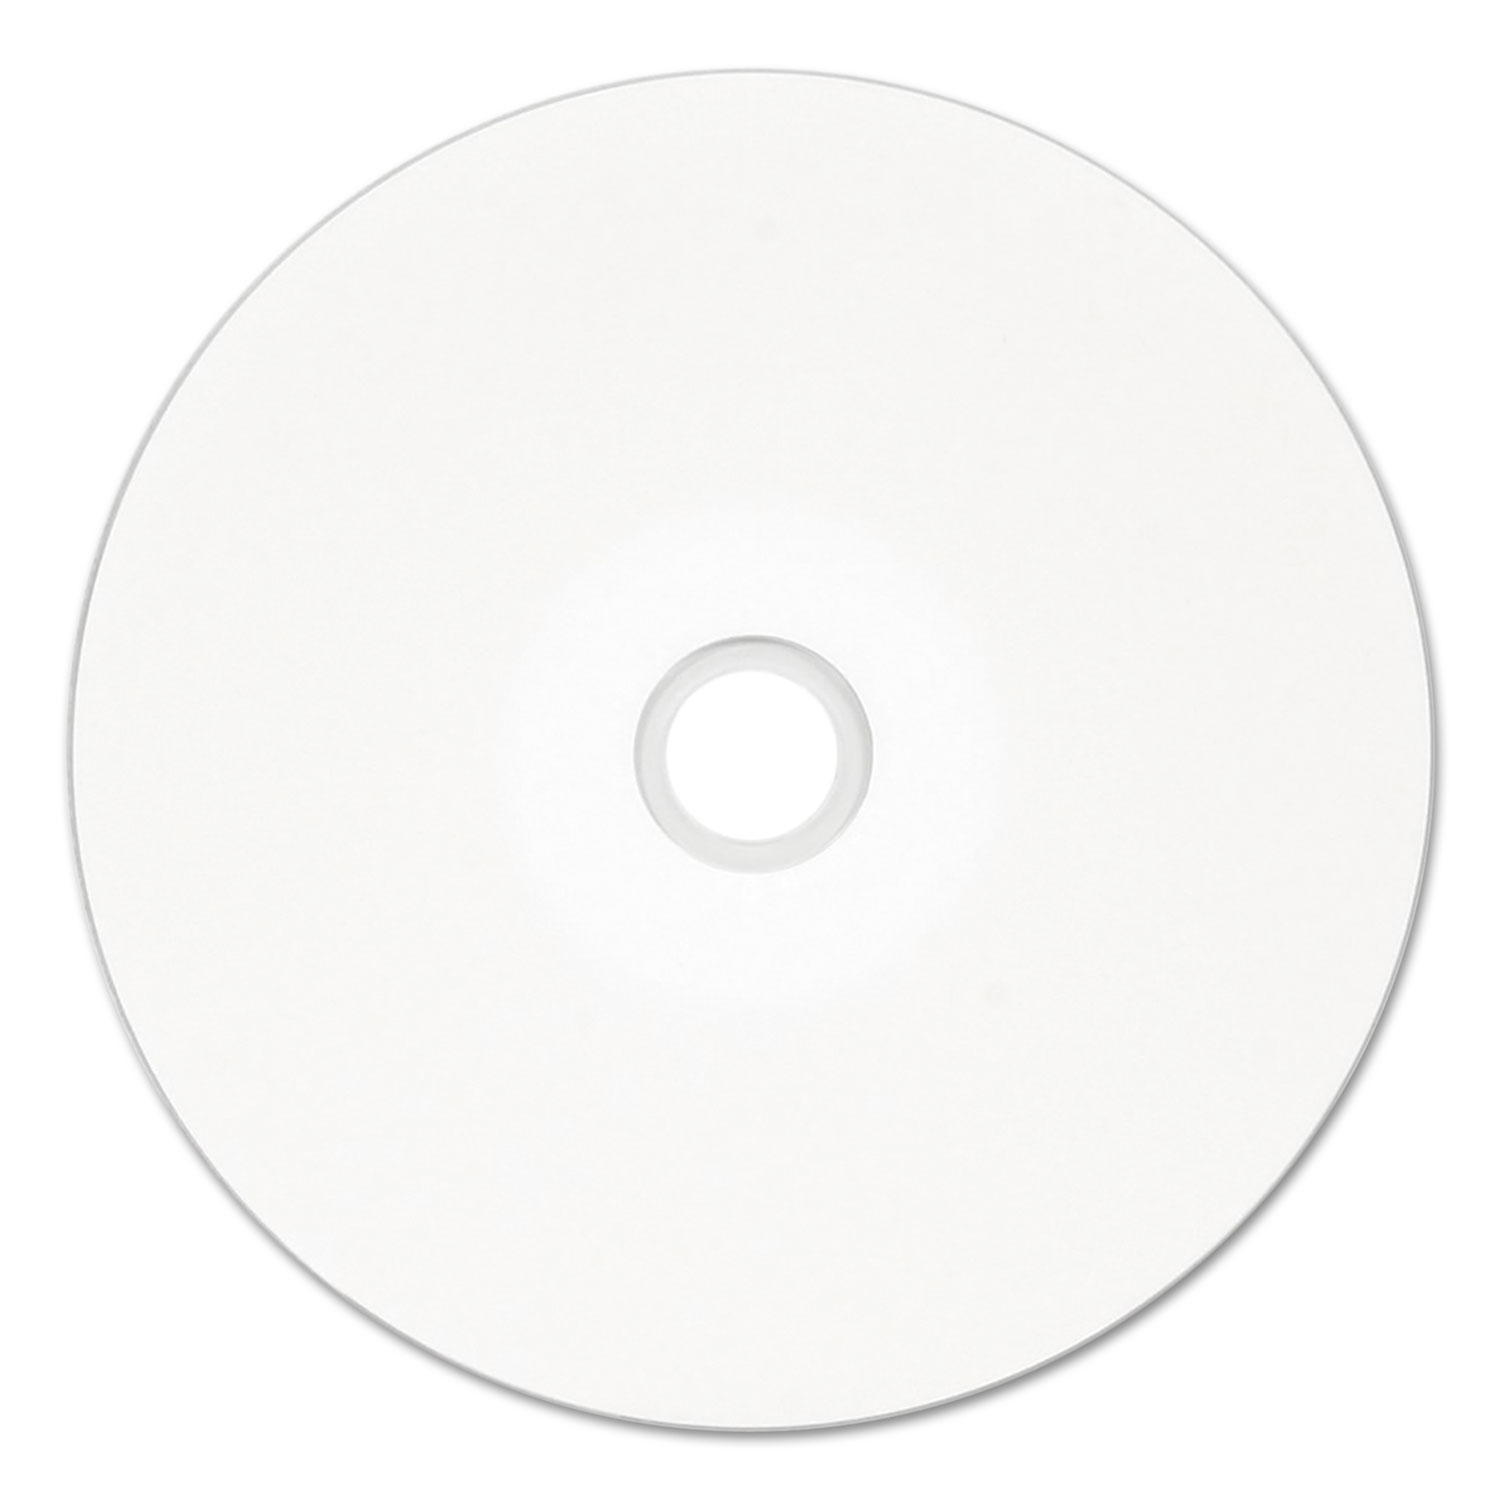 DVD-R Discs 4.7GB 16X DataLifePlus White Inkjet Printable, 50/PK Spindle